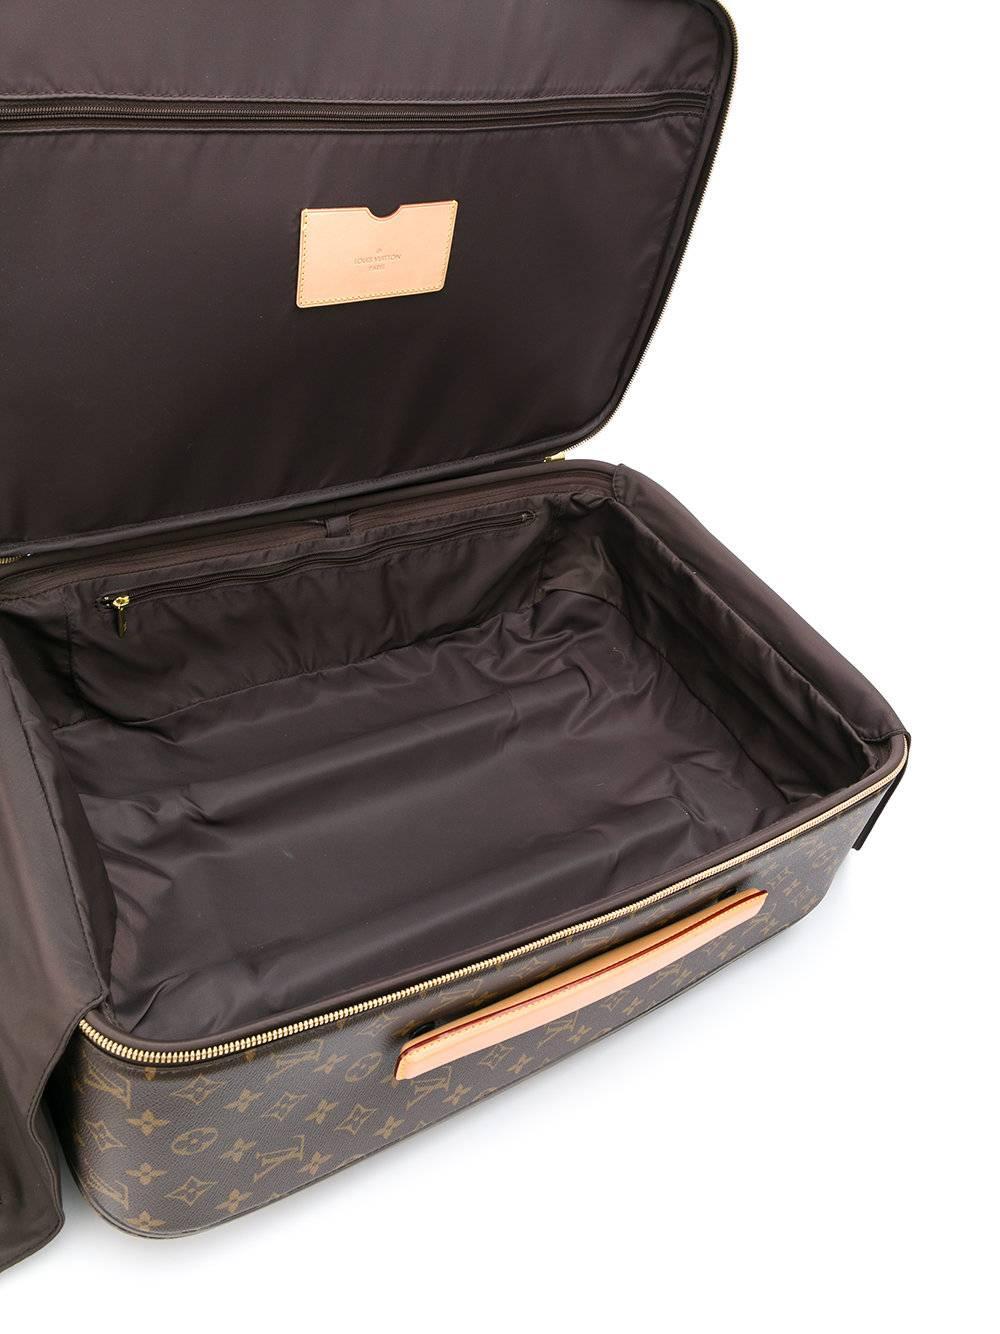 Women's Louis Vuitton Monogram Suitcase 55cm